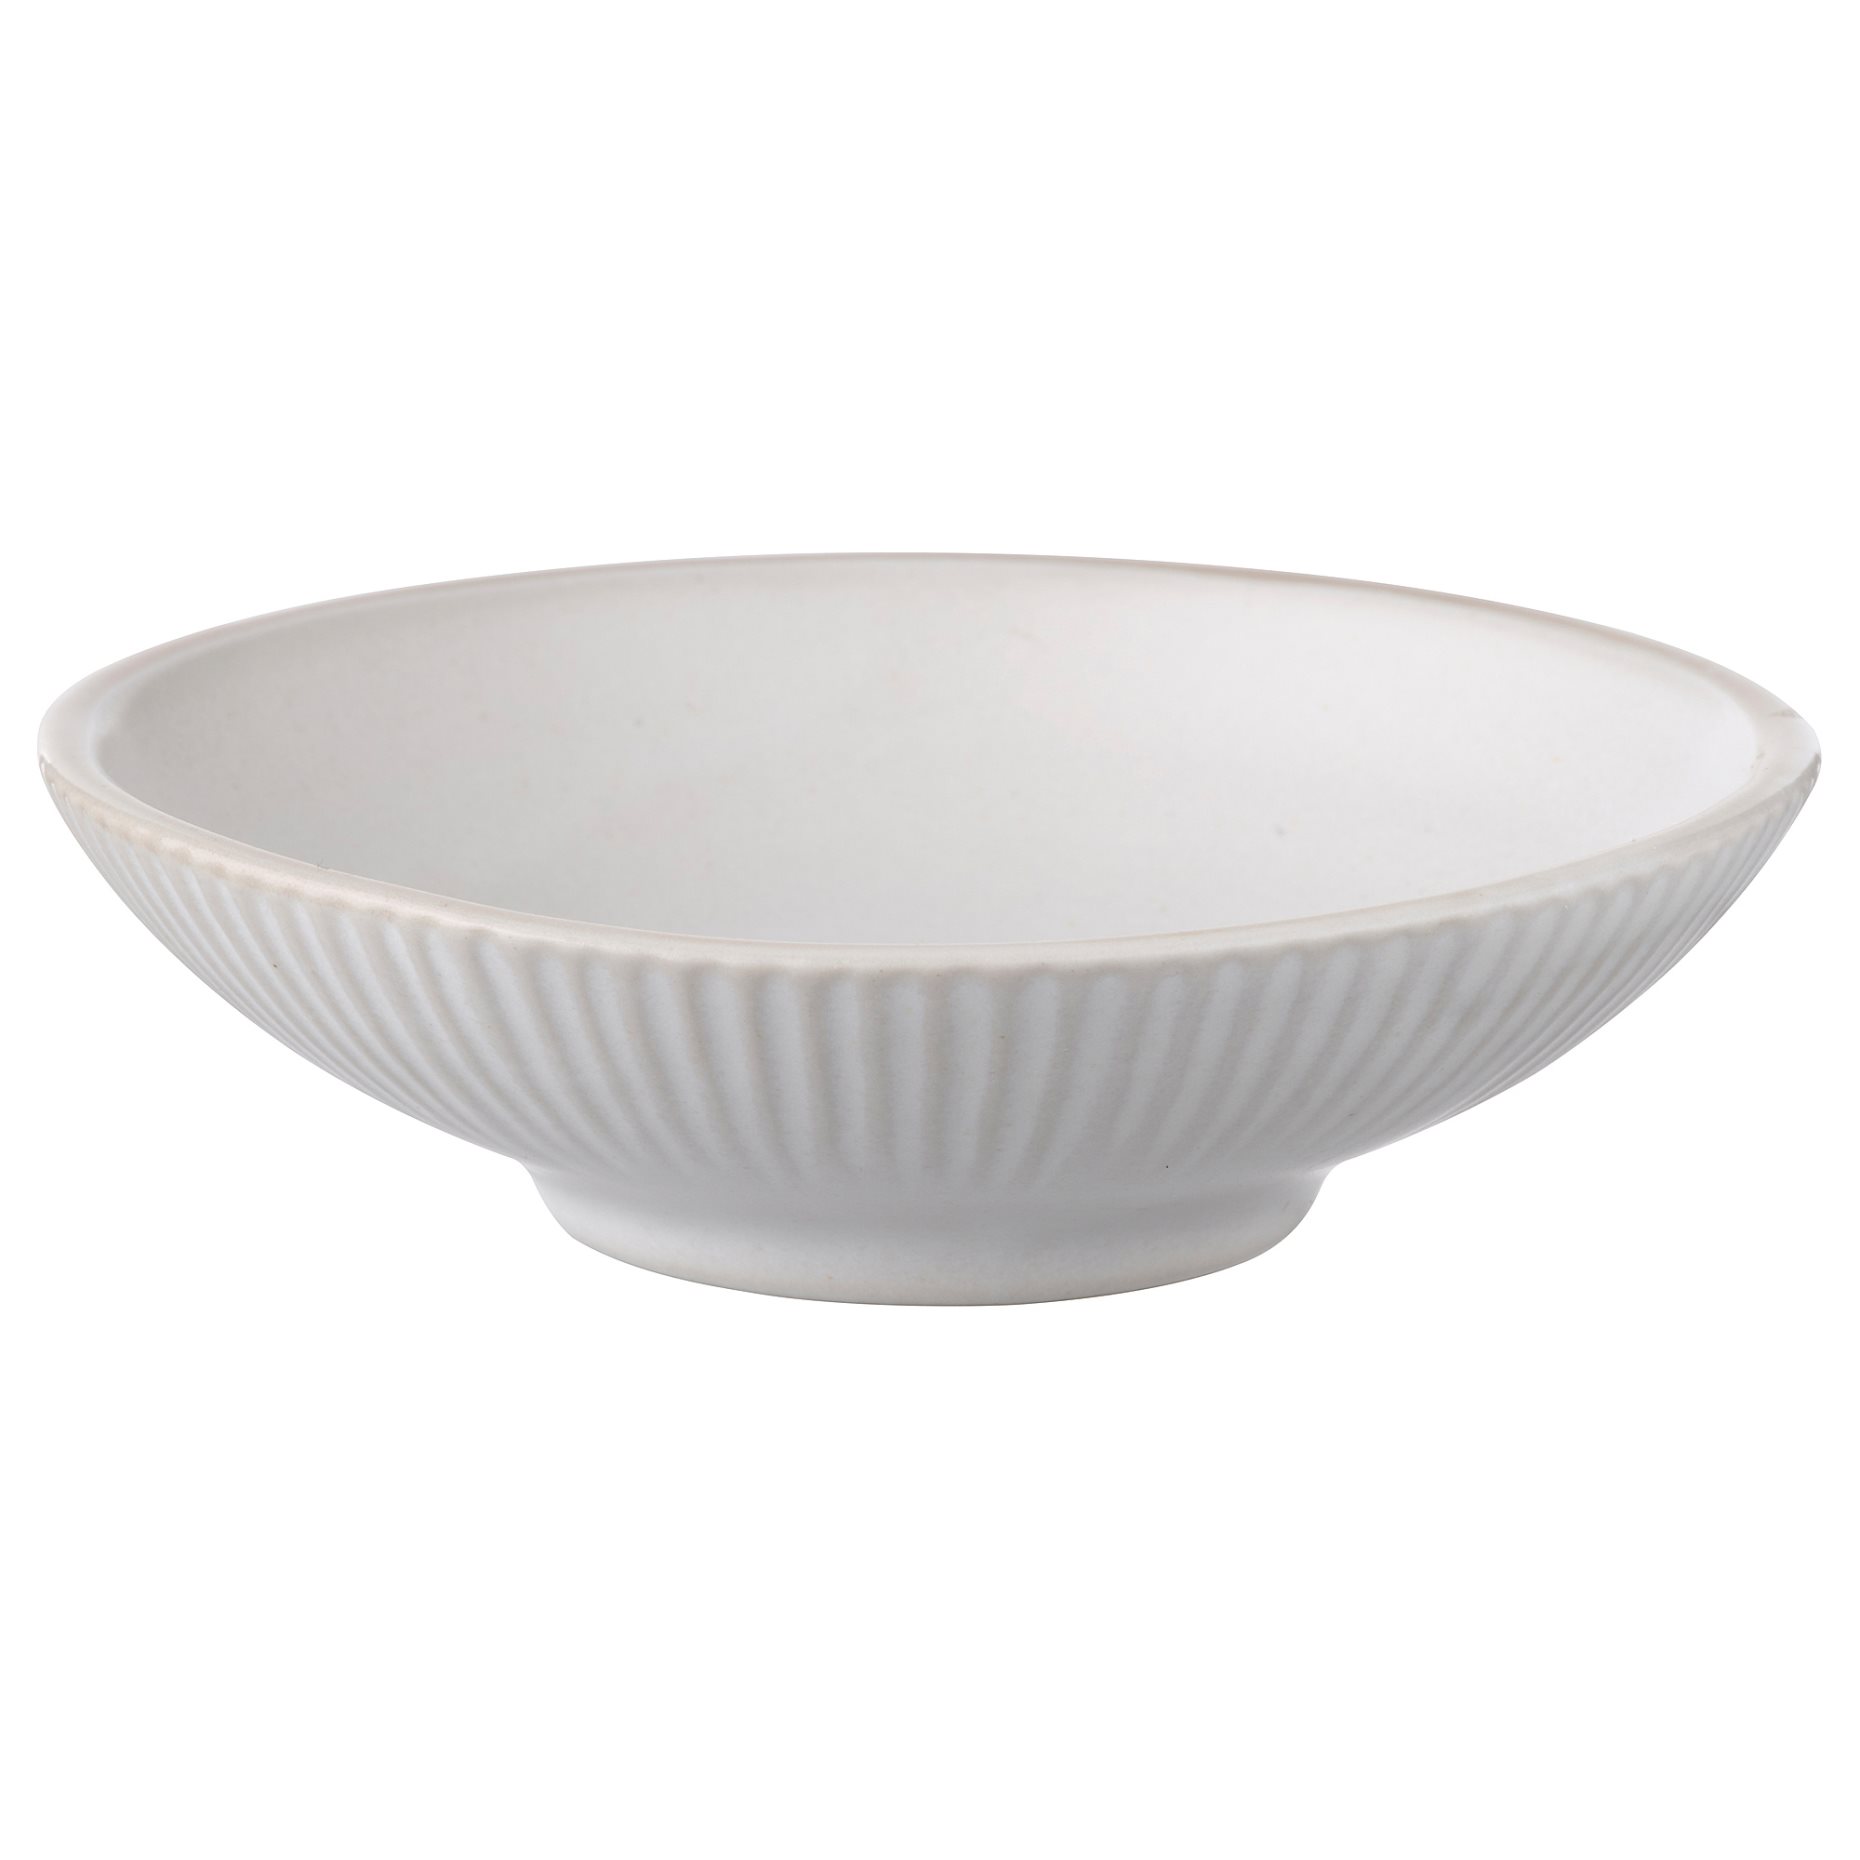 VÅRDANDE, decorative bowl, 10 cm, 805.273.62